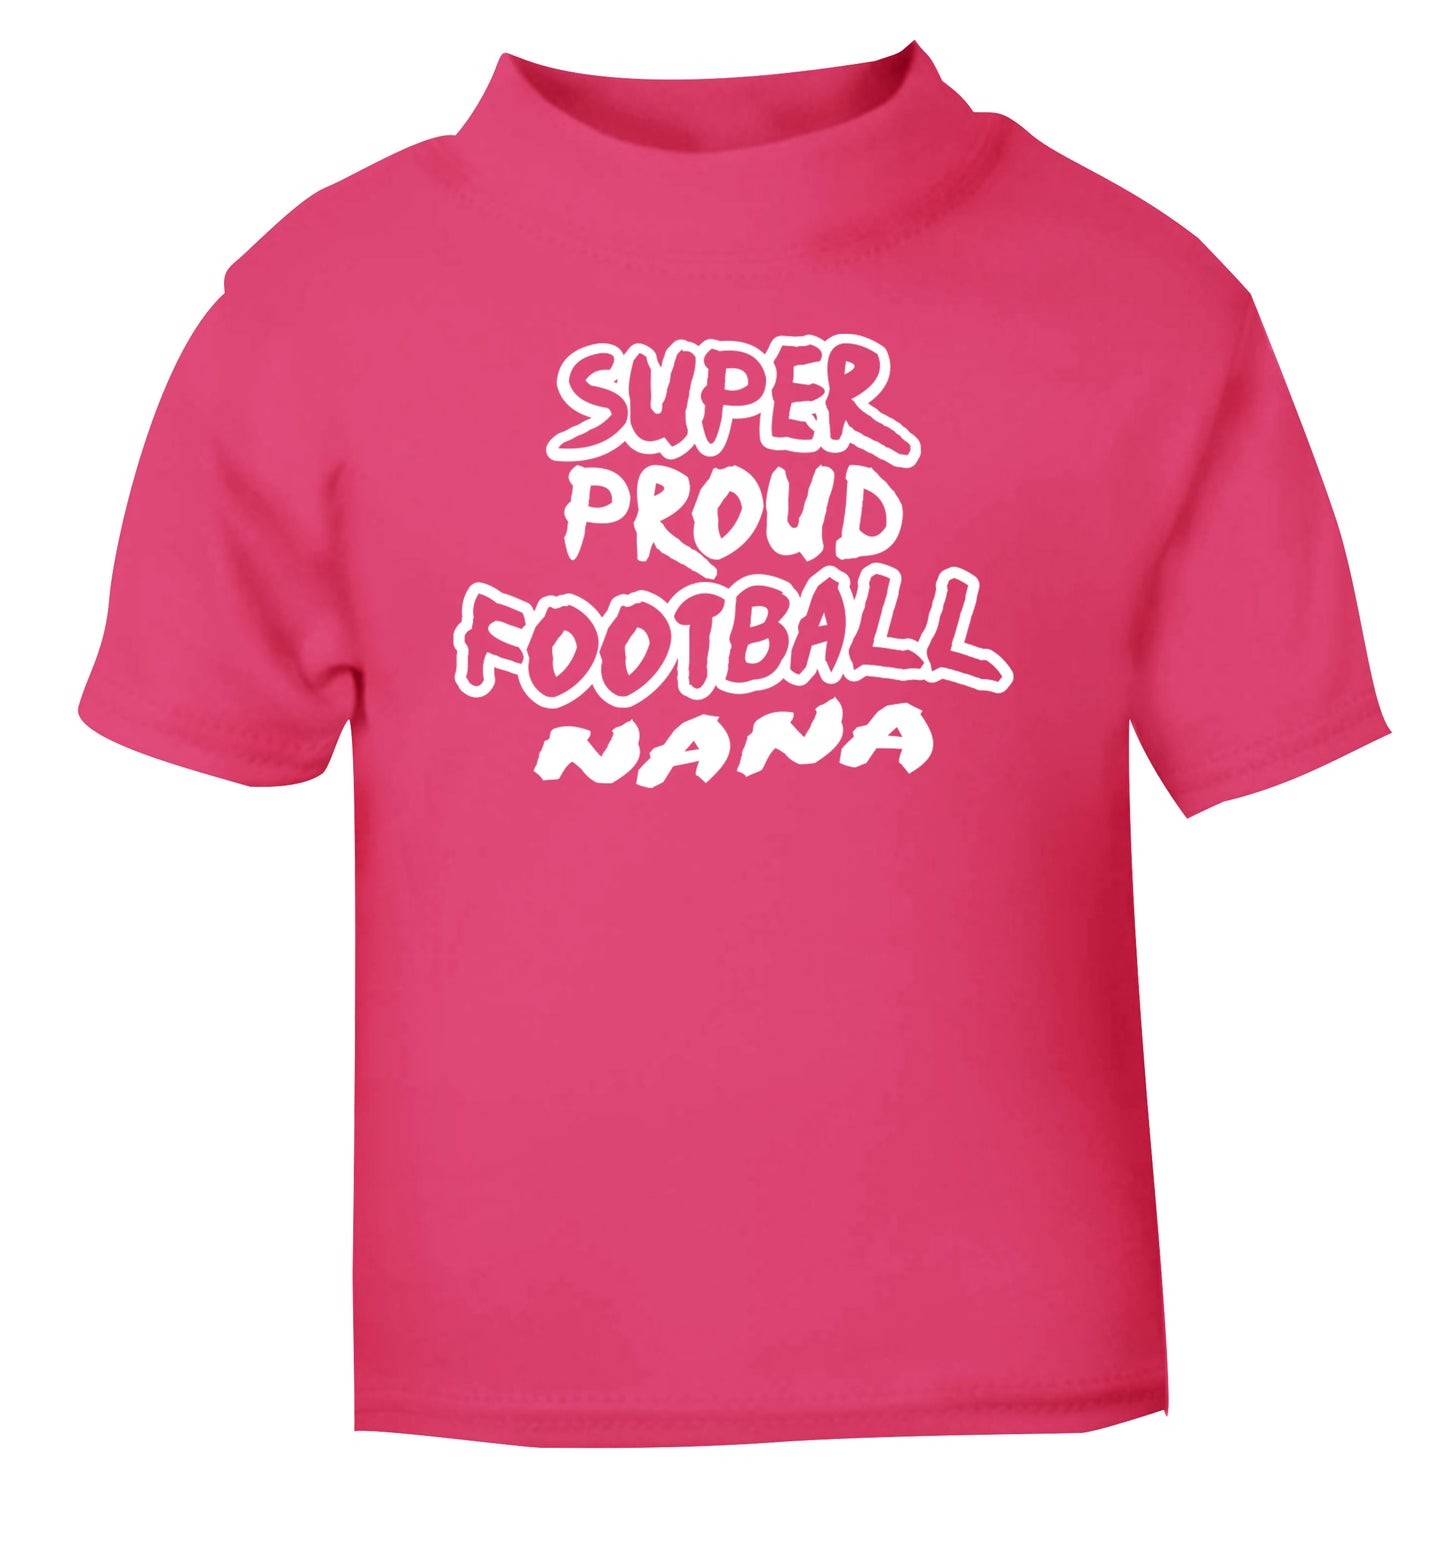 Super proud football nana pink Baby Toddler Tshirt 2 Years